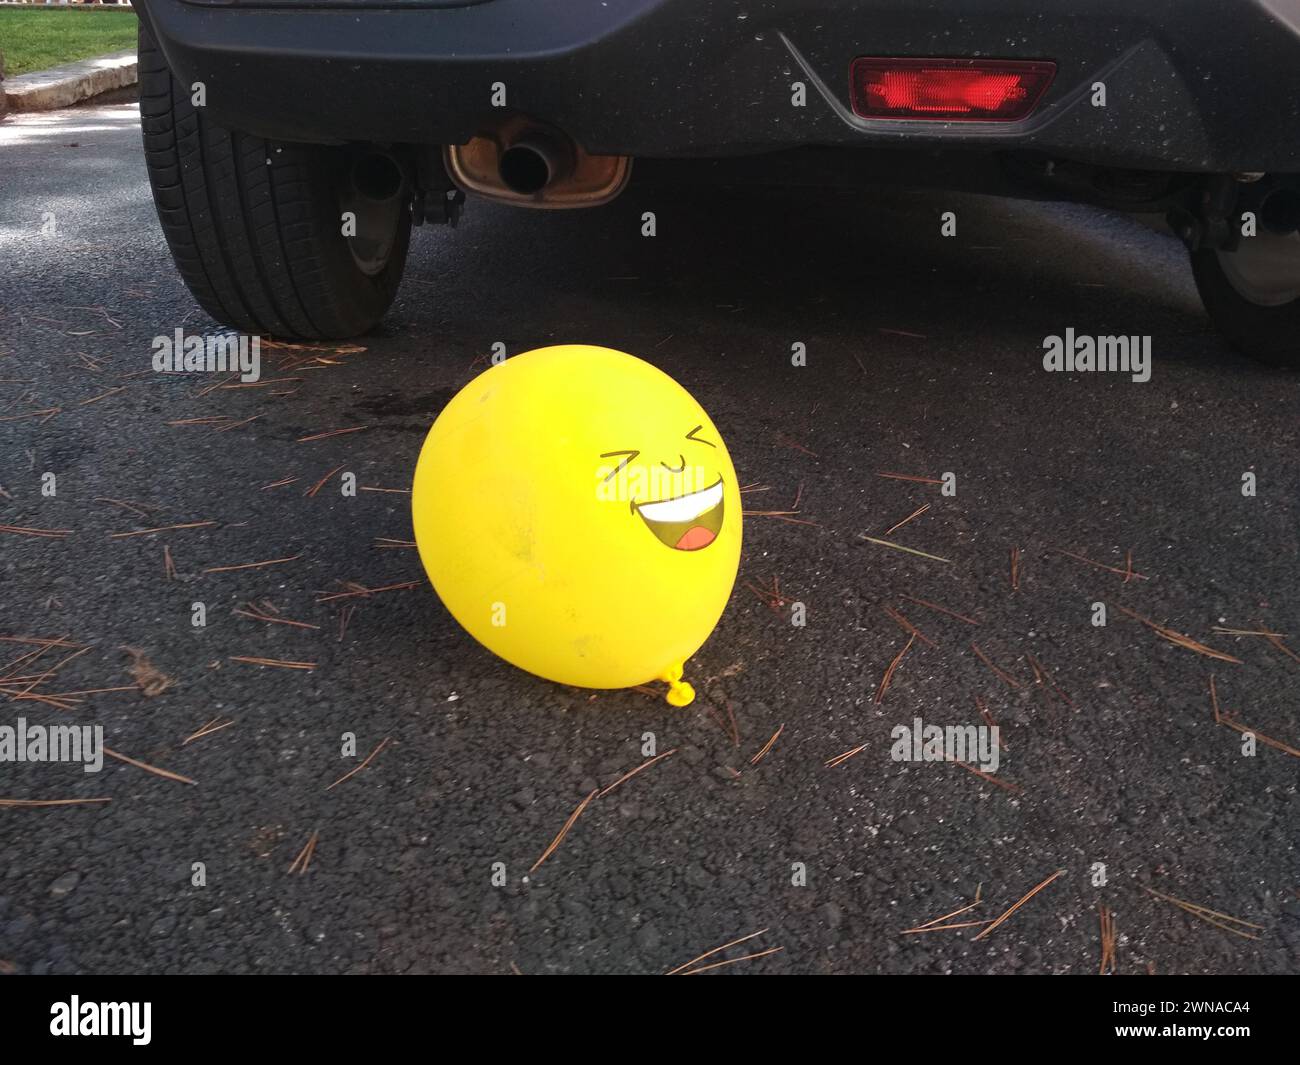 Luftballon unter einem Auto Foto Stock